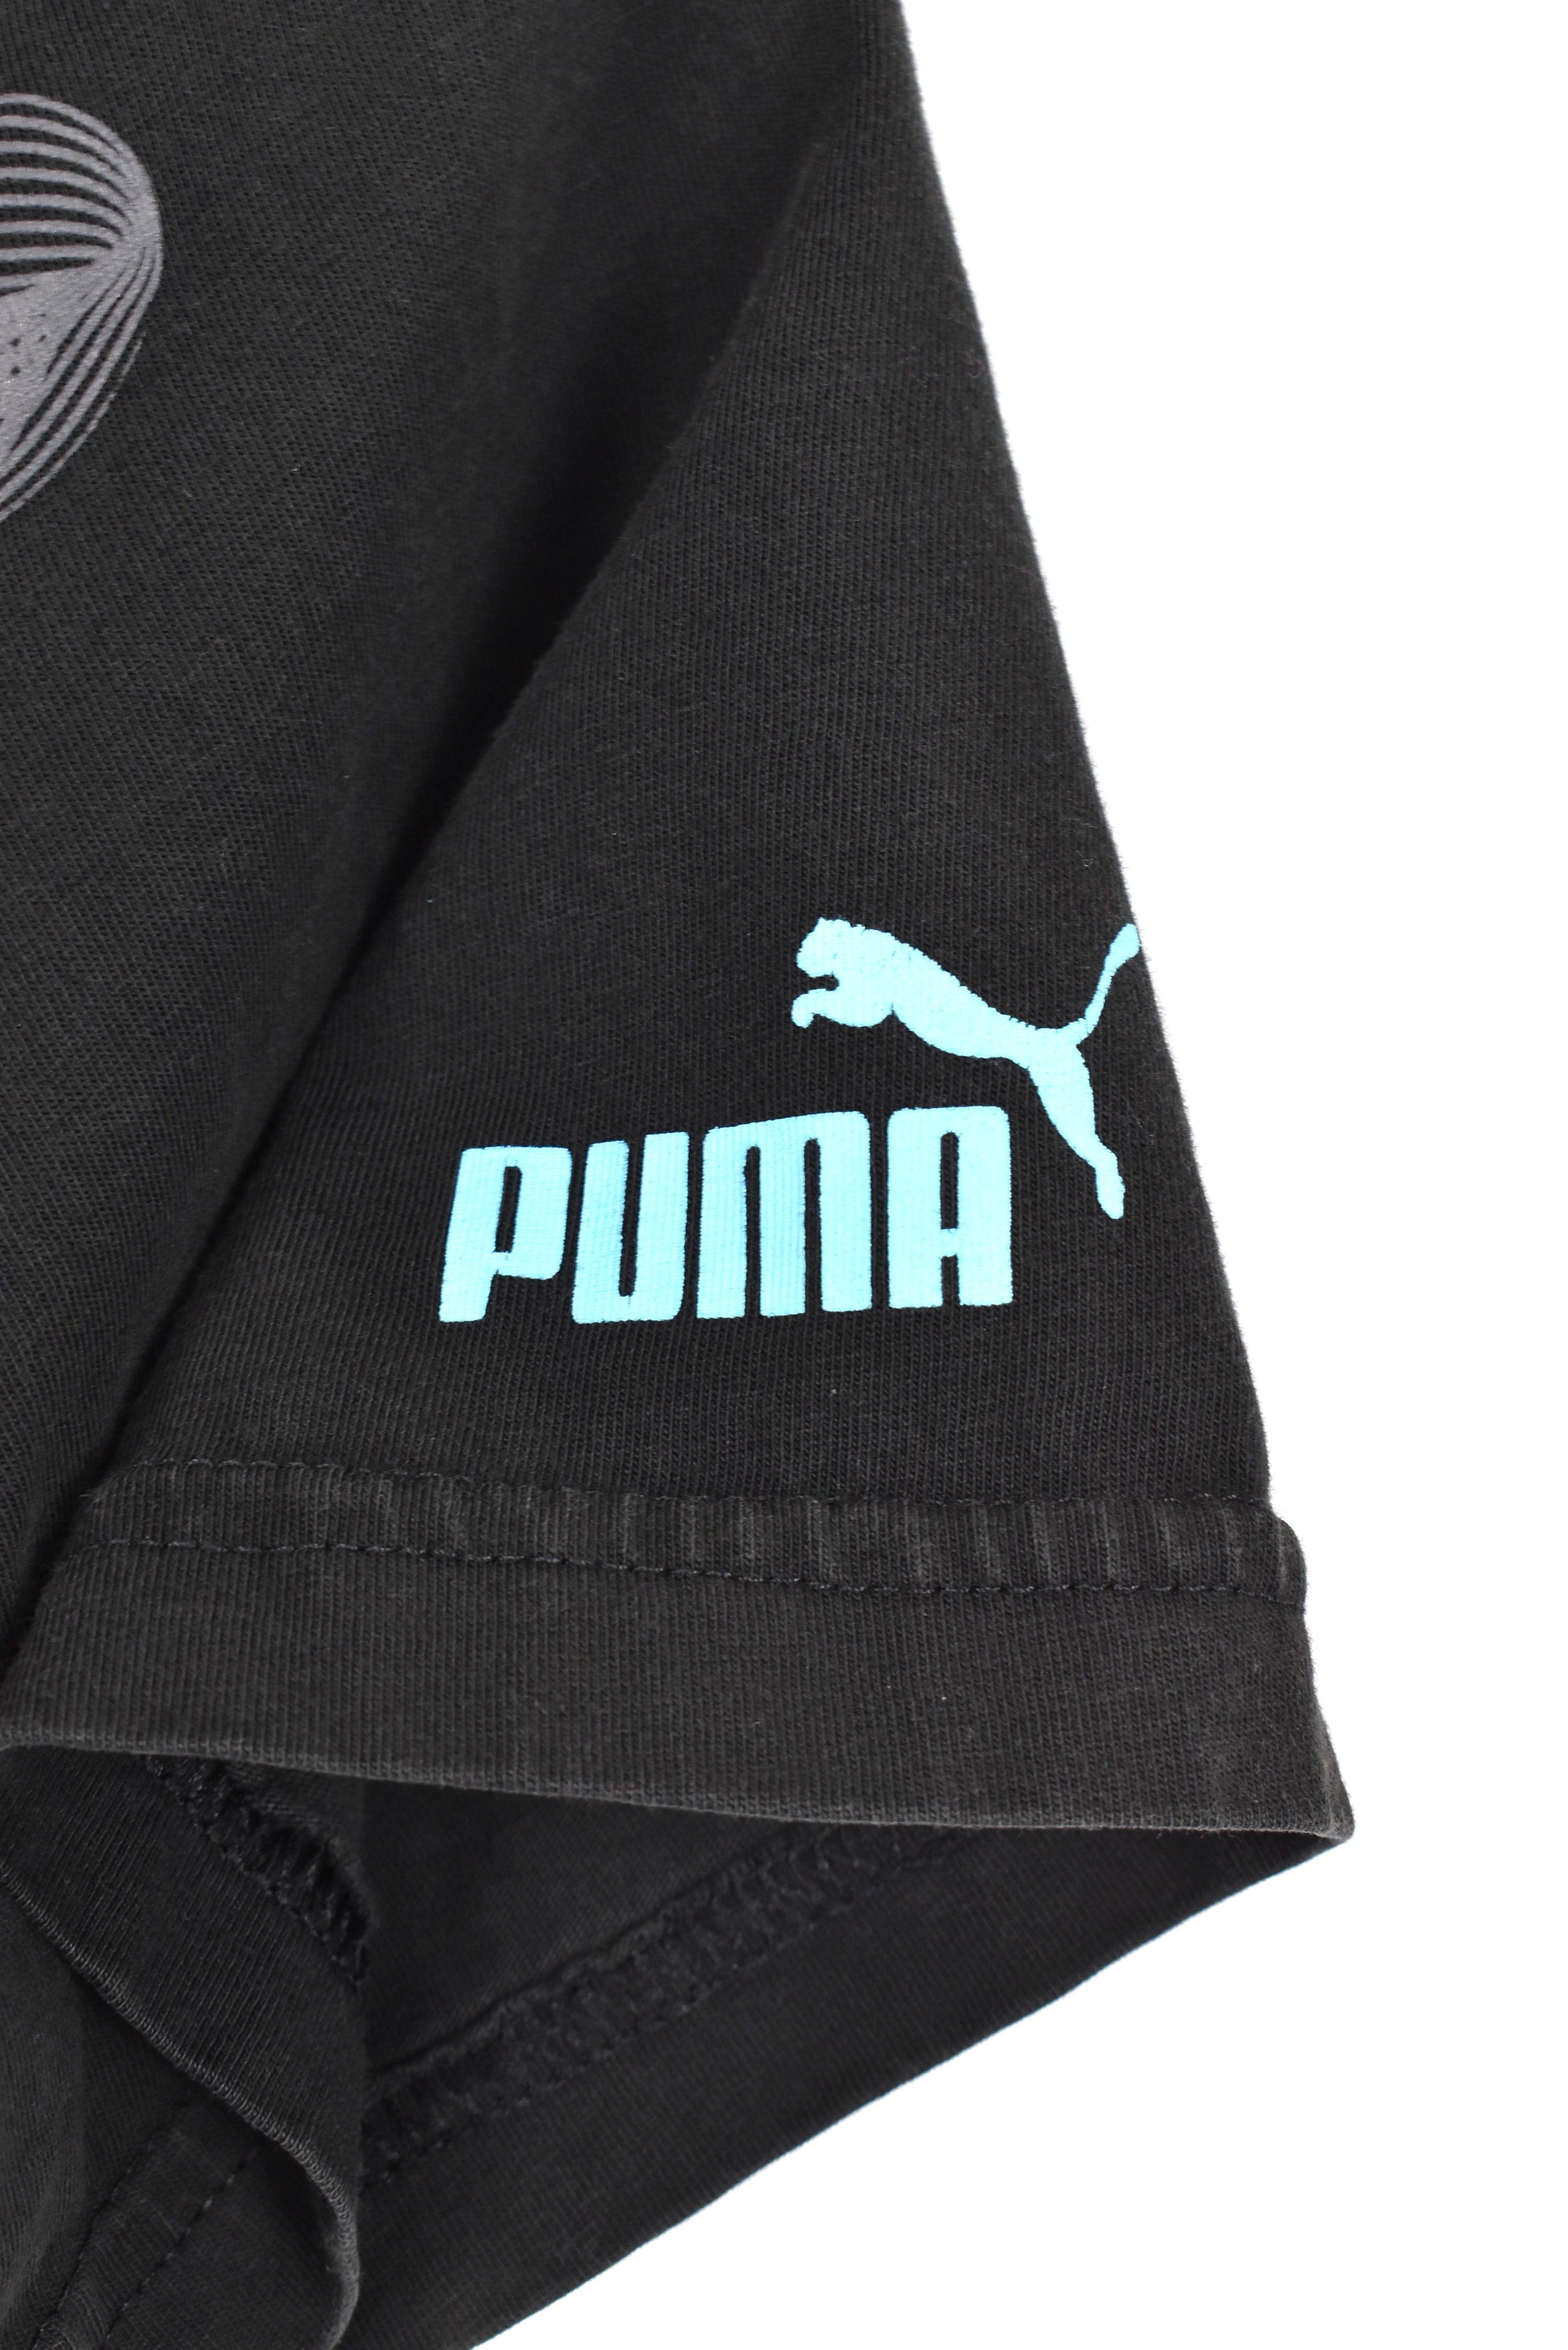 Women's modern Puma shirt, black graphic tee - AU S PUMA